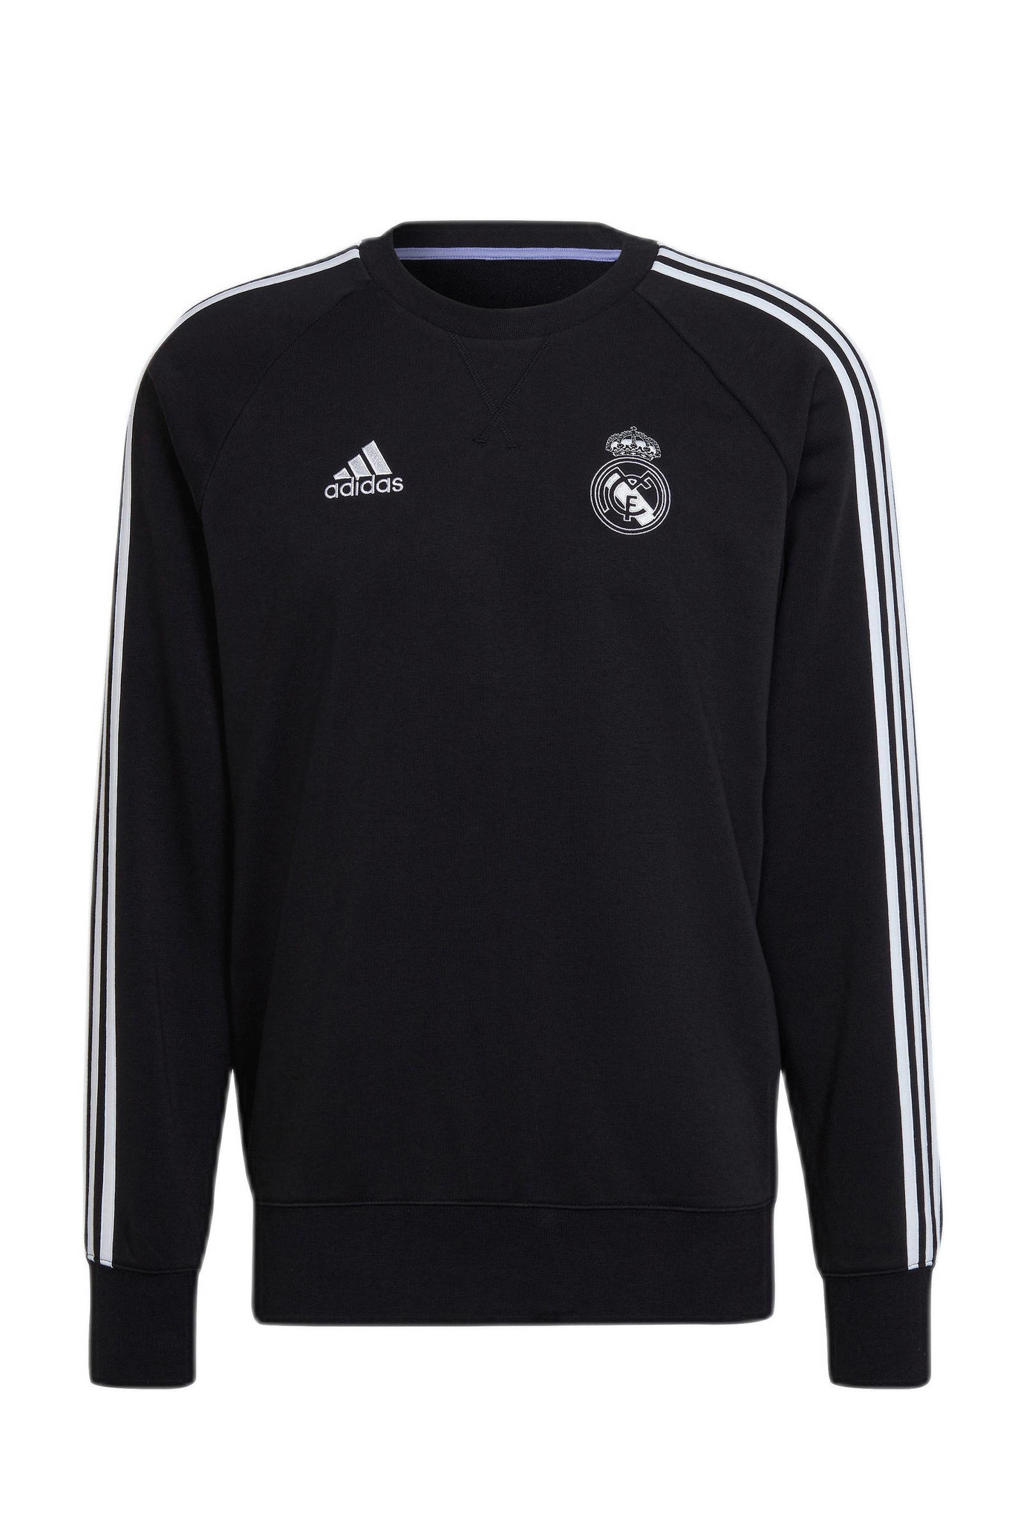 adidas Performance Senior Real Madrid voetbalsweater zwart/wit